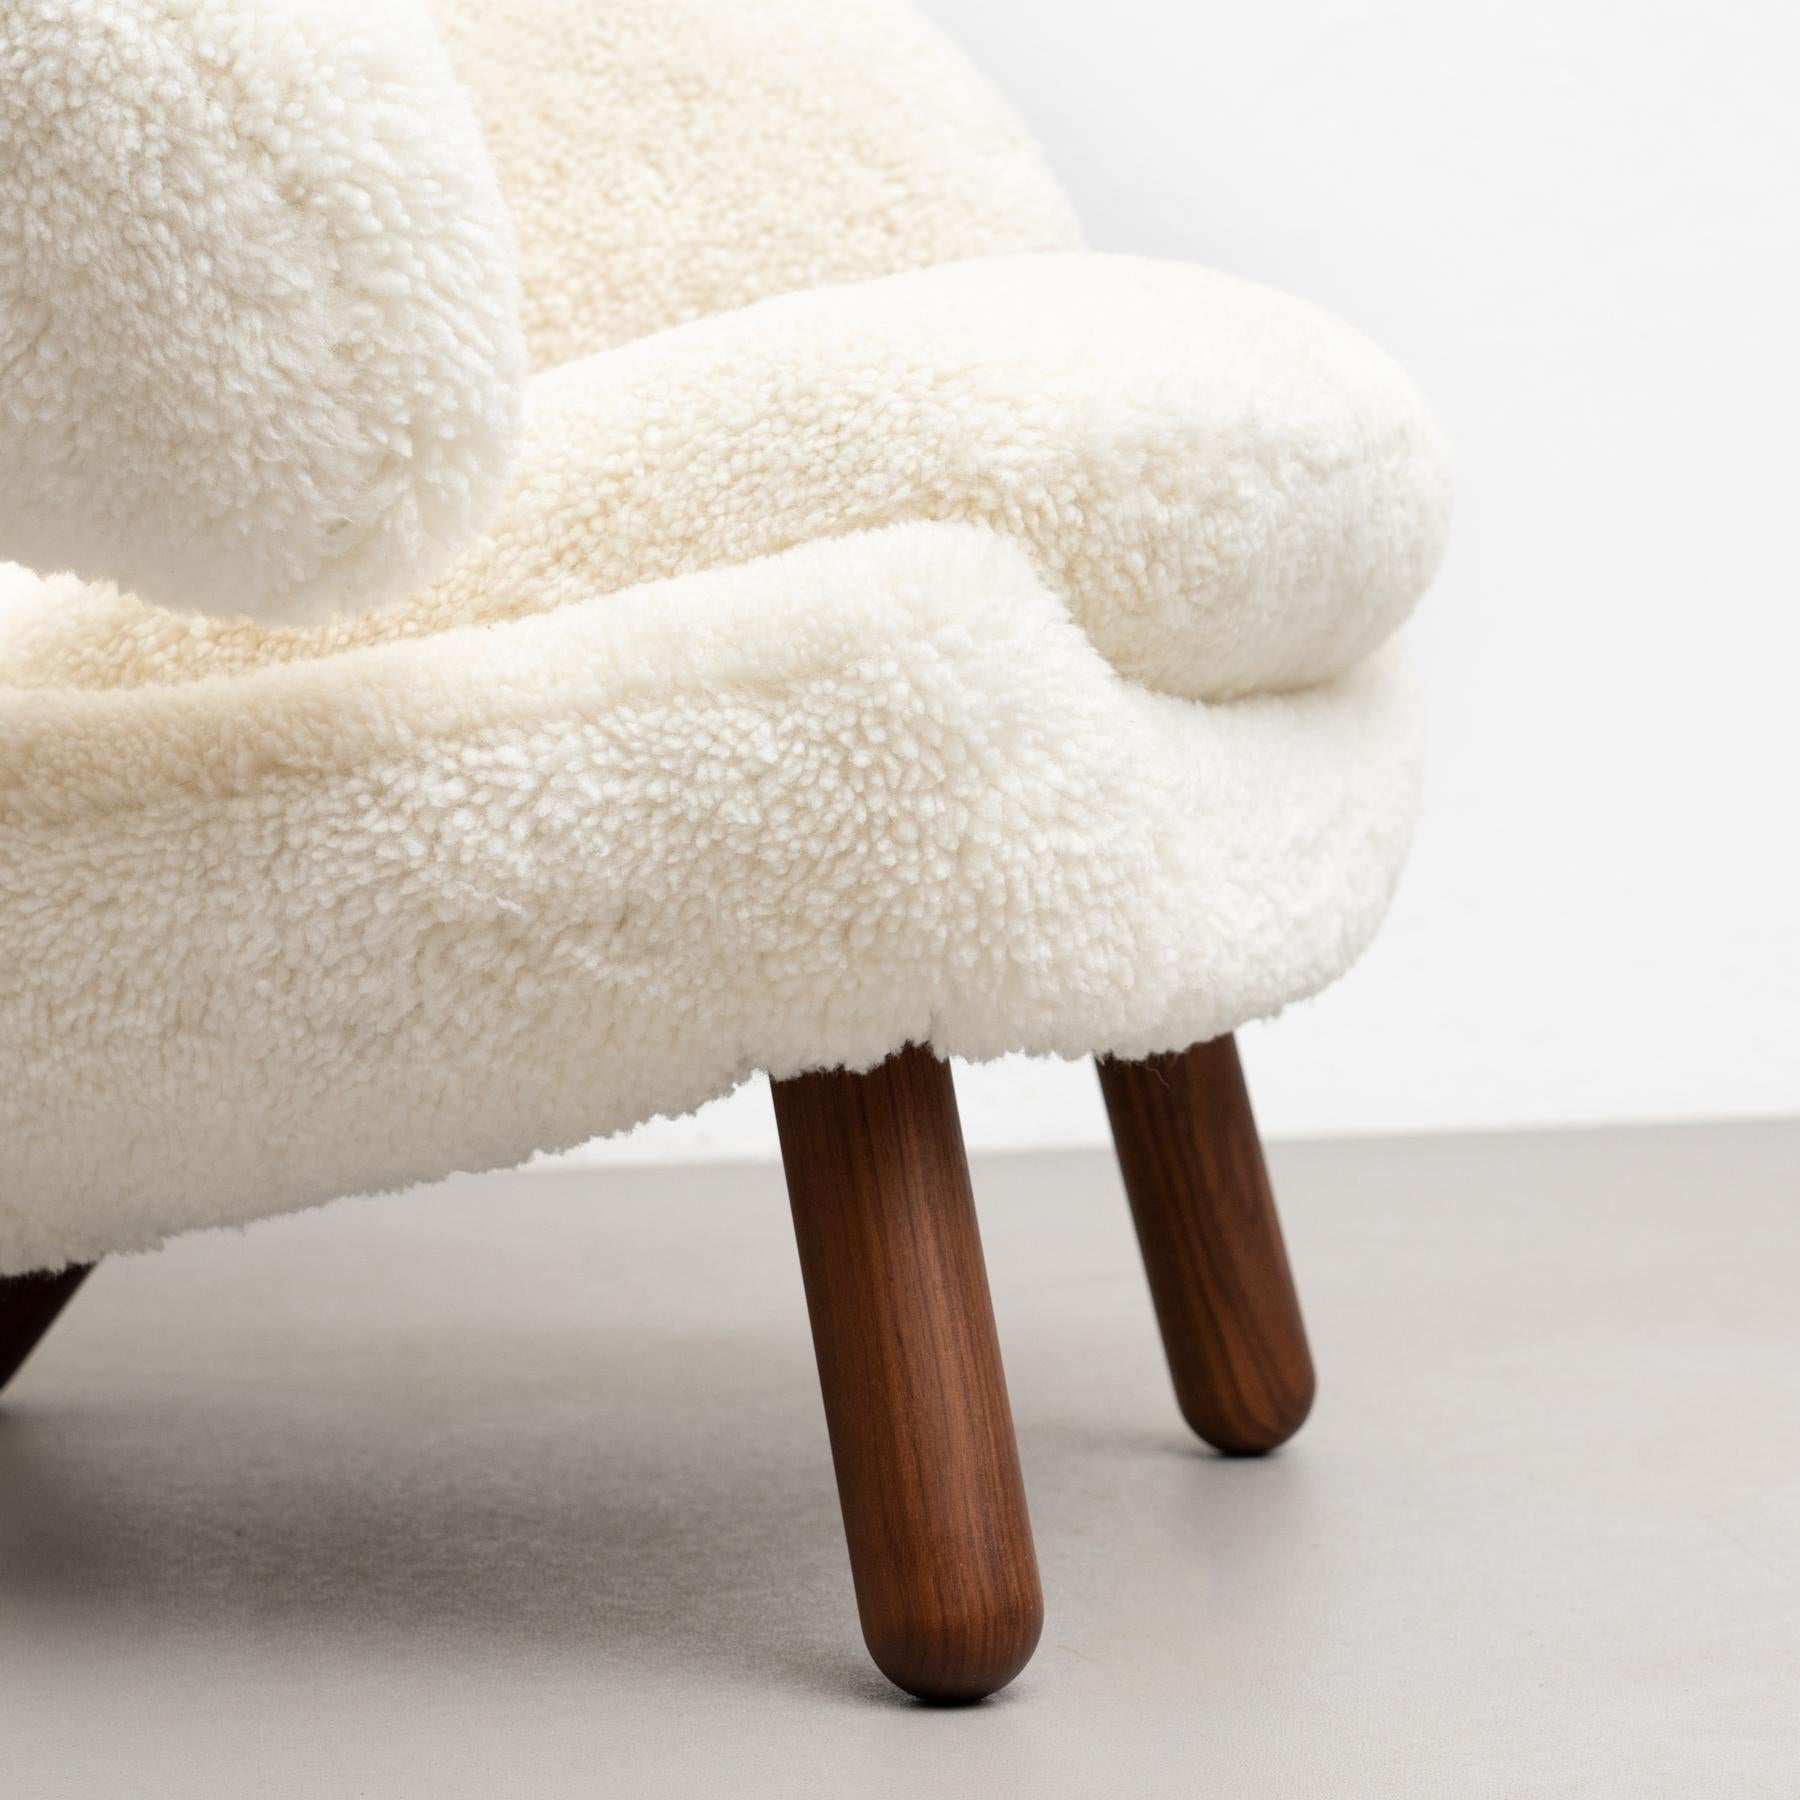 Moderne Finn Juhl Pelican Chair Upholstered in Offwhite Sheepskin (Chaise Pélican recouverte de peau de mouton blanc cassé) en vente